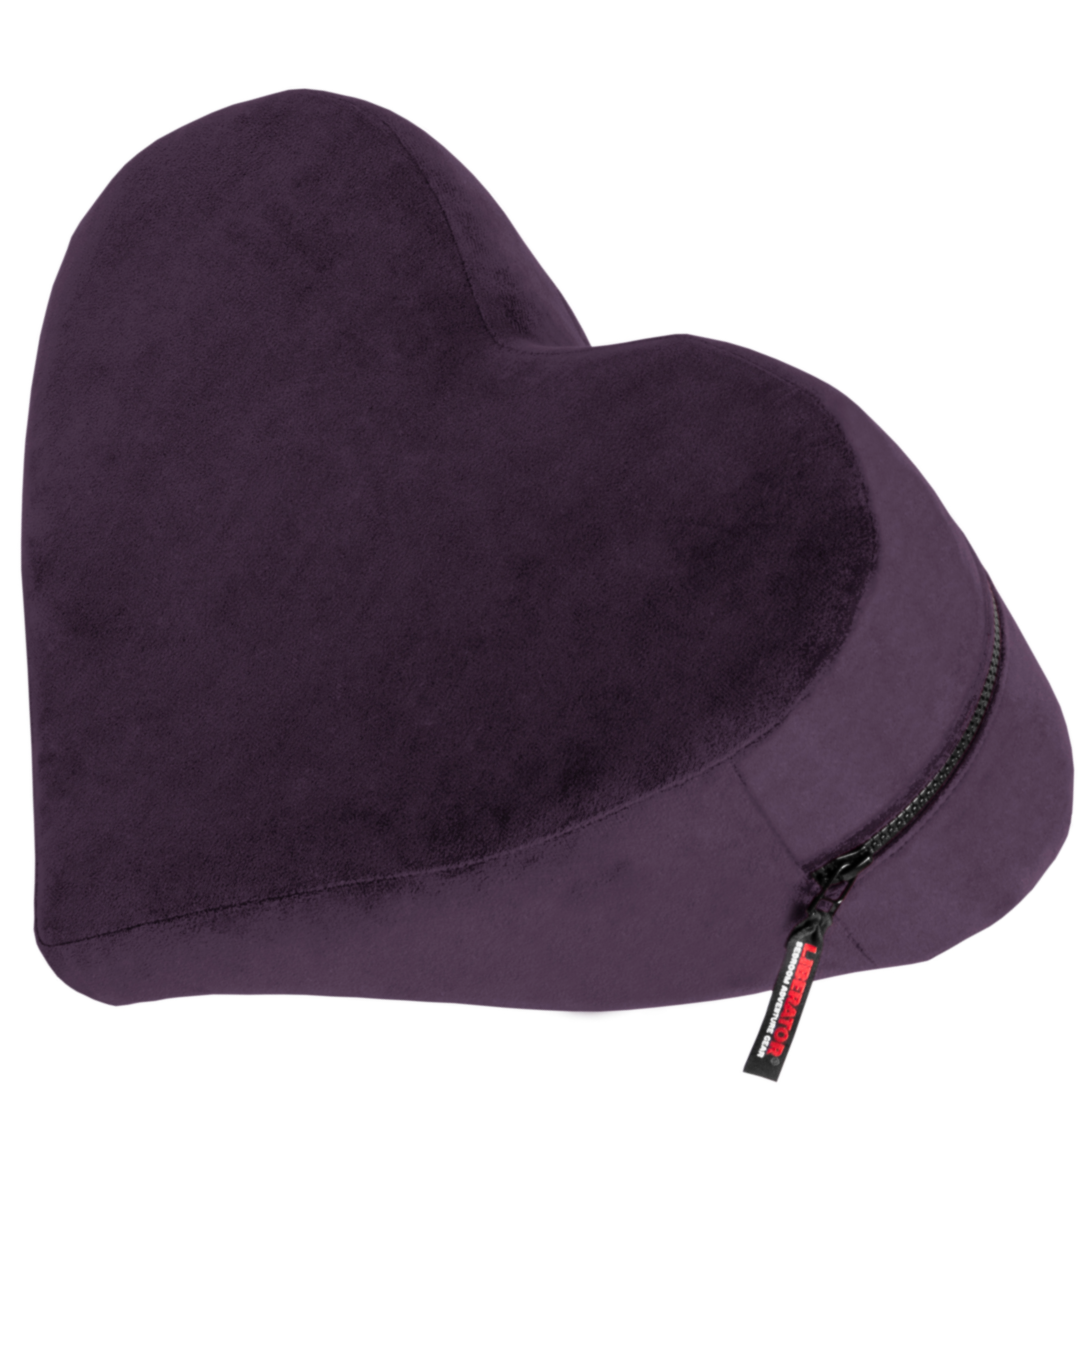 Liberator Decor Heart Wedge Sex Positioning Cushion - Assorted Colors plum